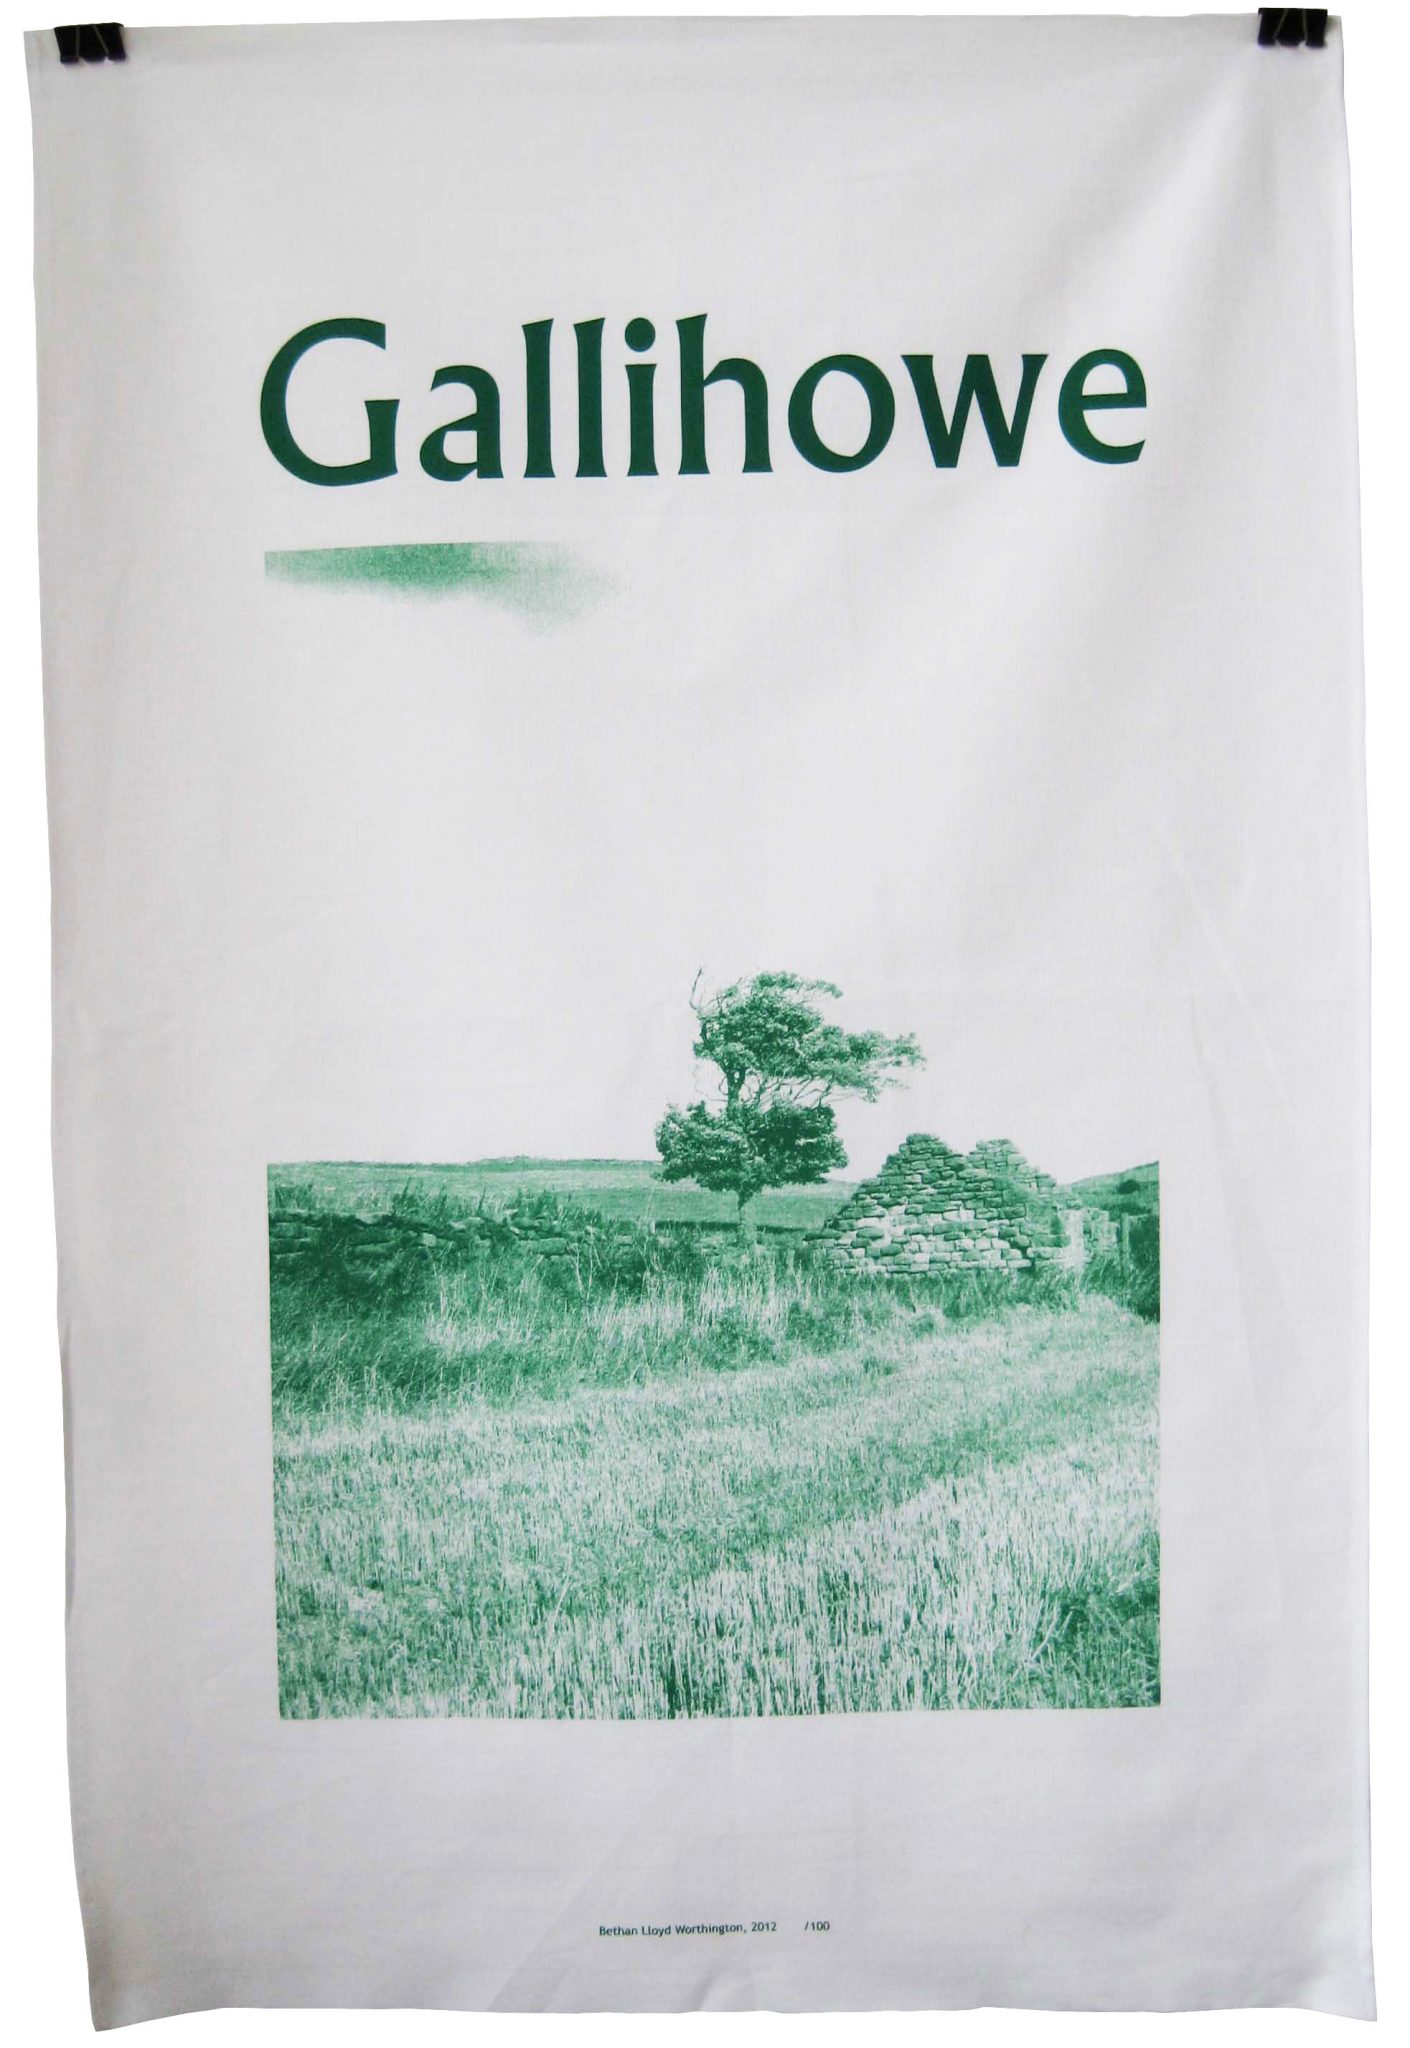 Gallihowe teatowel - Screenprinted on cotton. A souvenir of a place that no longer exists.